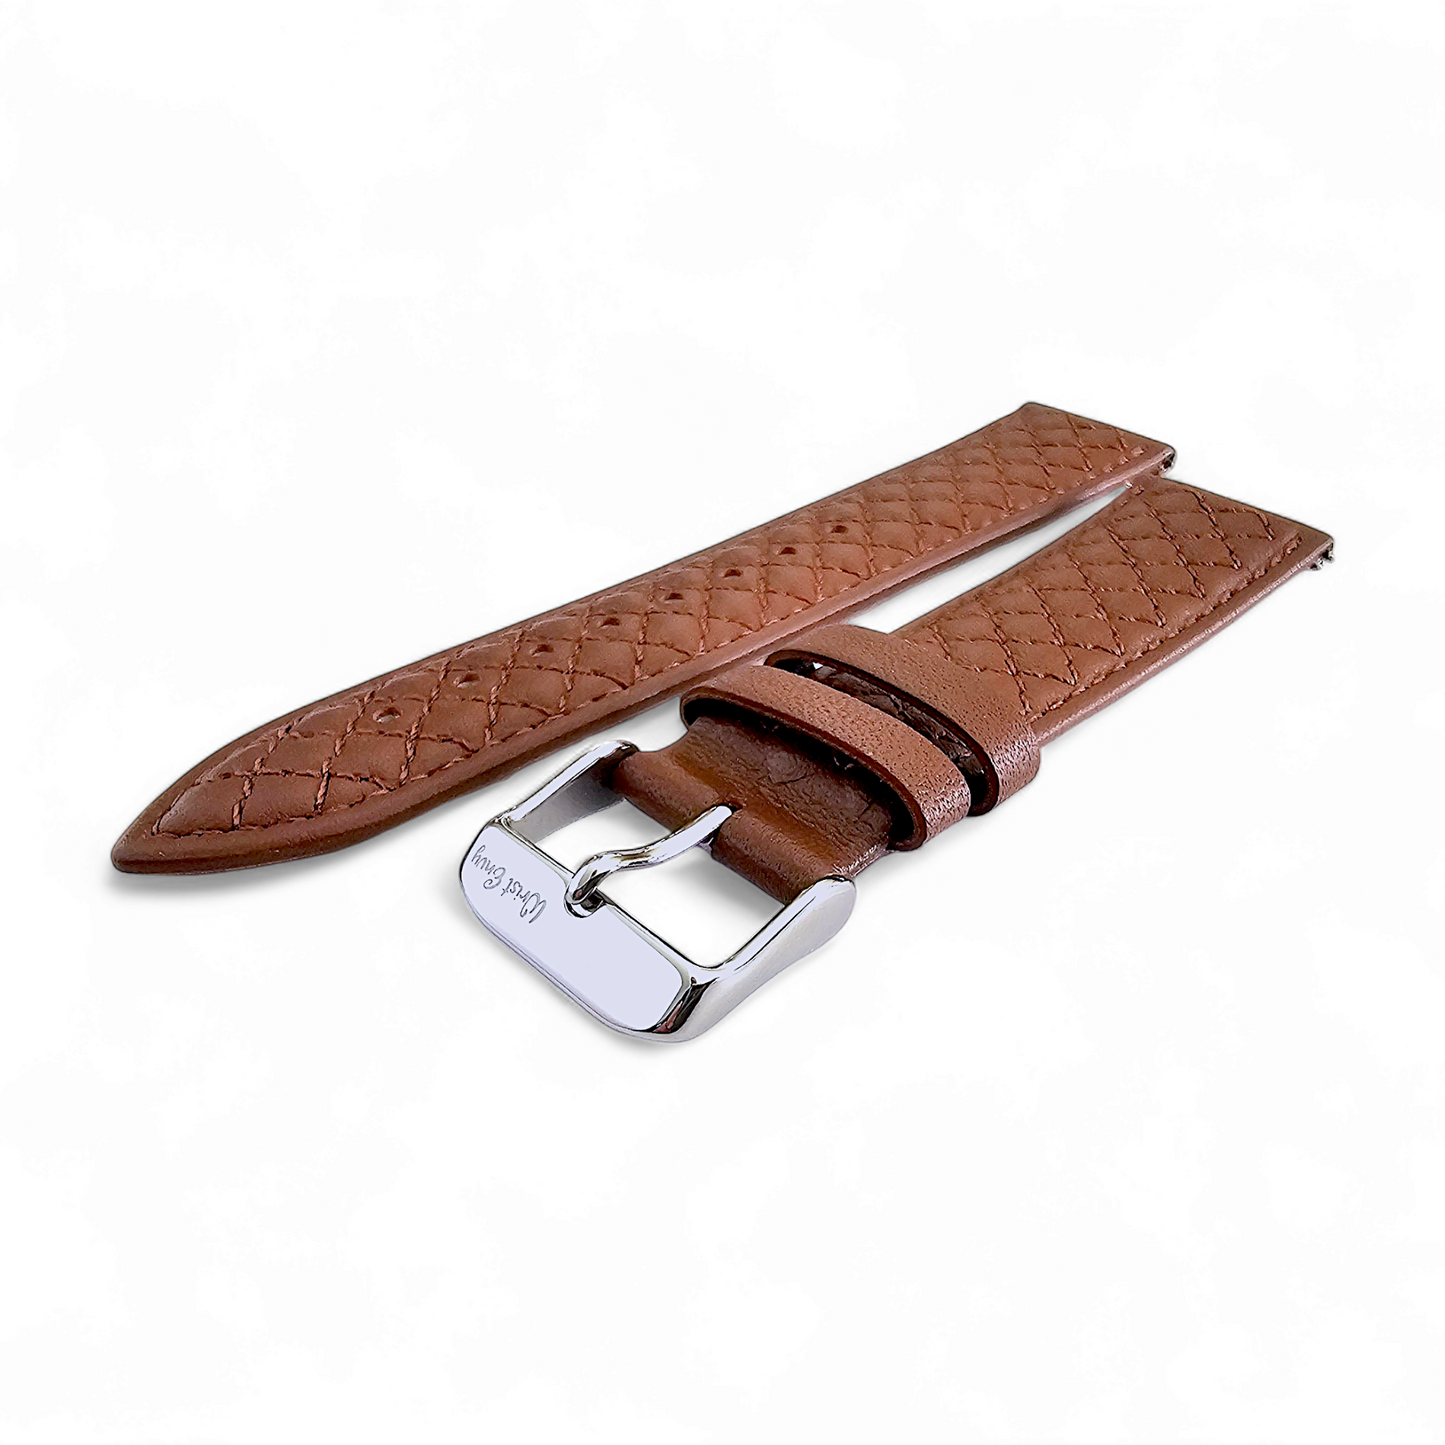 Fine Italian Leather Diamond Stitch Watch Strap Band 18mm 20mm 22mm Brown